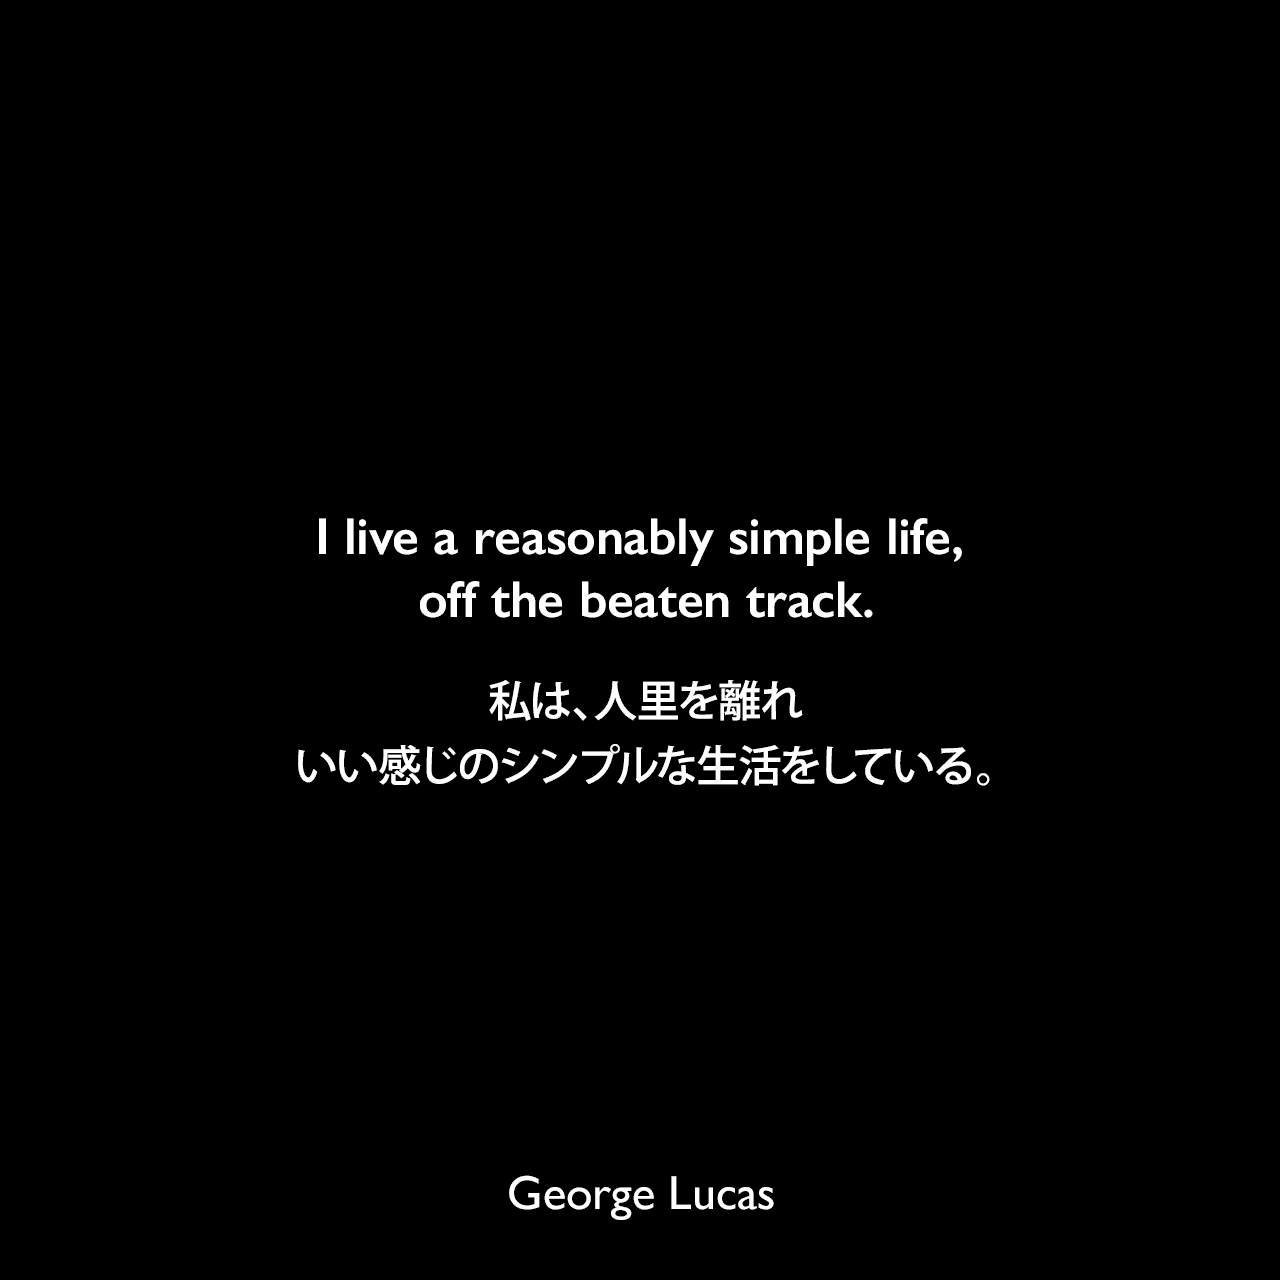 I live a reasonably simple life, off the beaten track.私は、人里を離れ、いい感じのシンプルな生活をしている。George Lucas